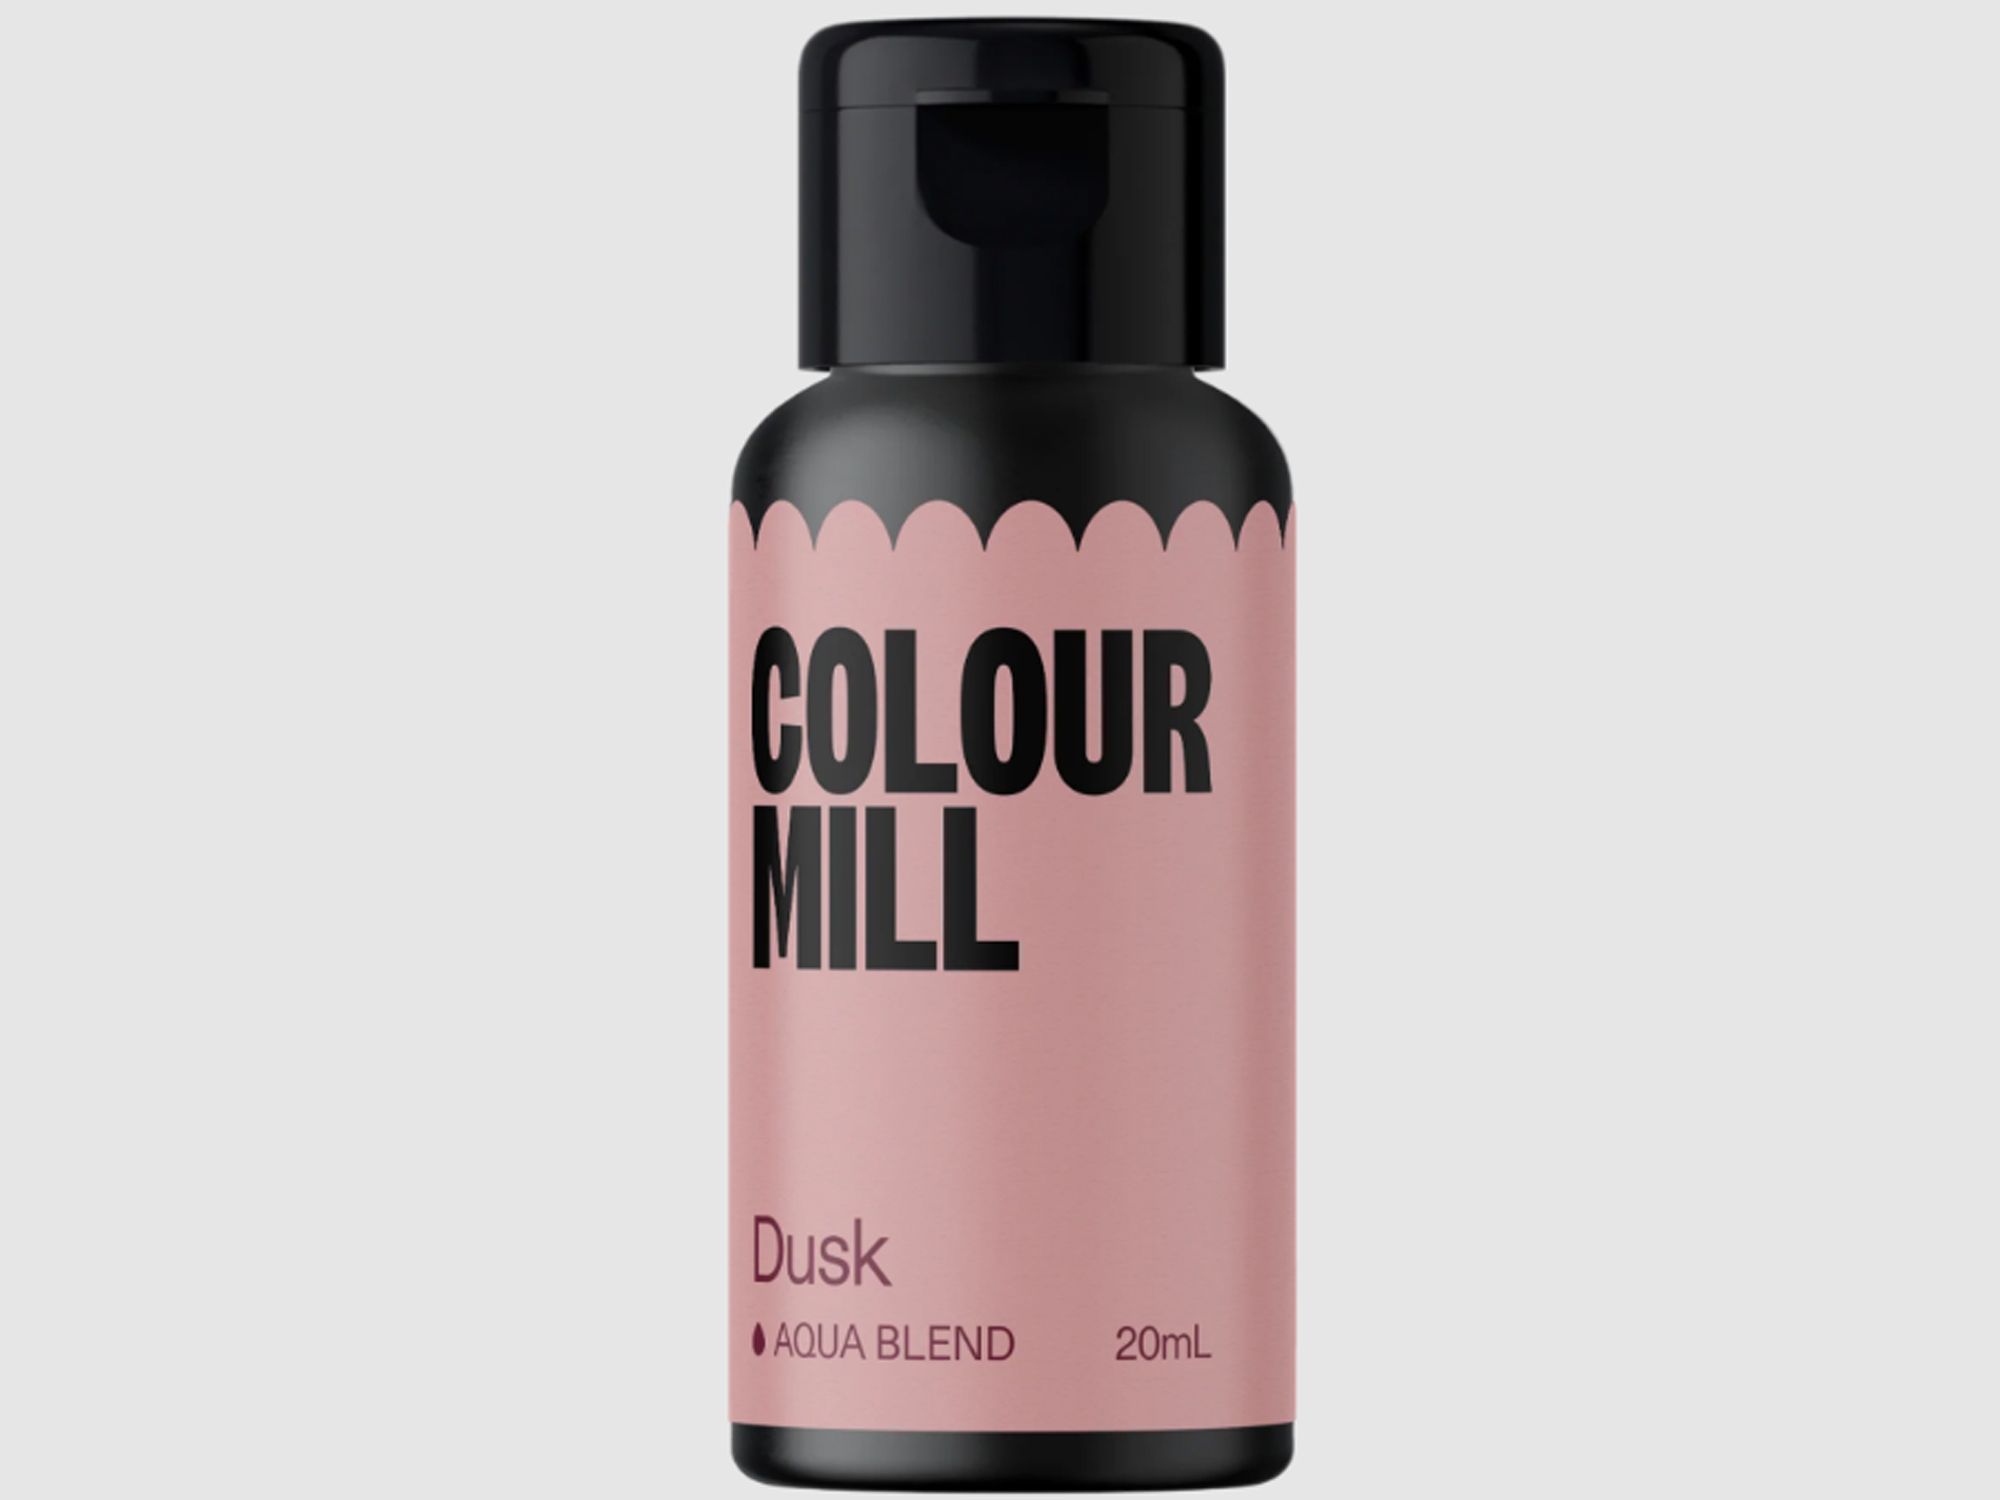 Colour Mill Dusk (Aqua Blend) 20ml